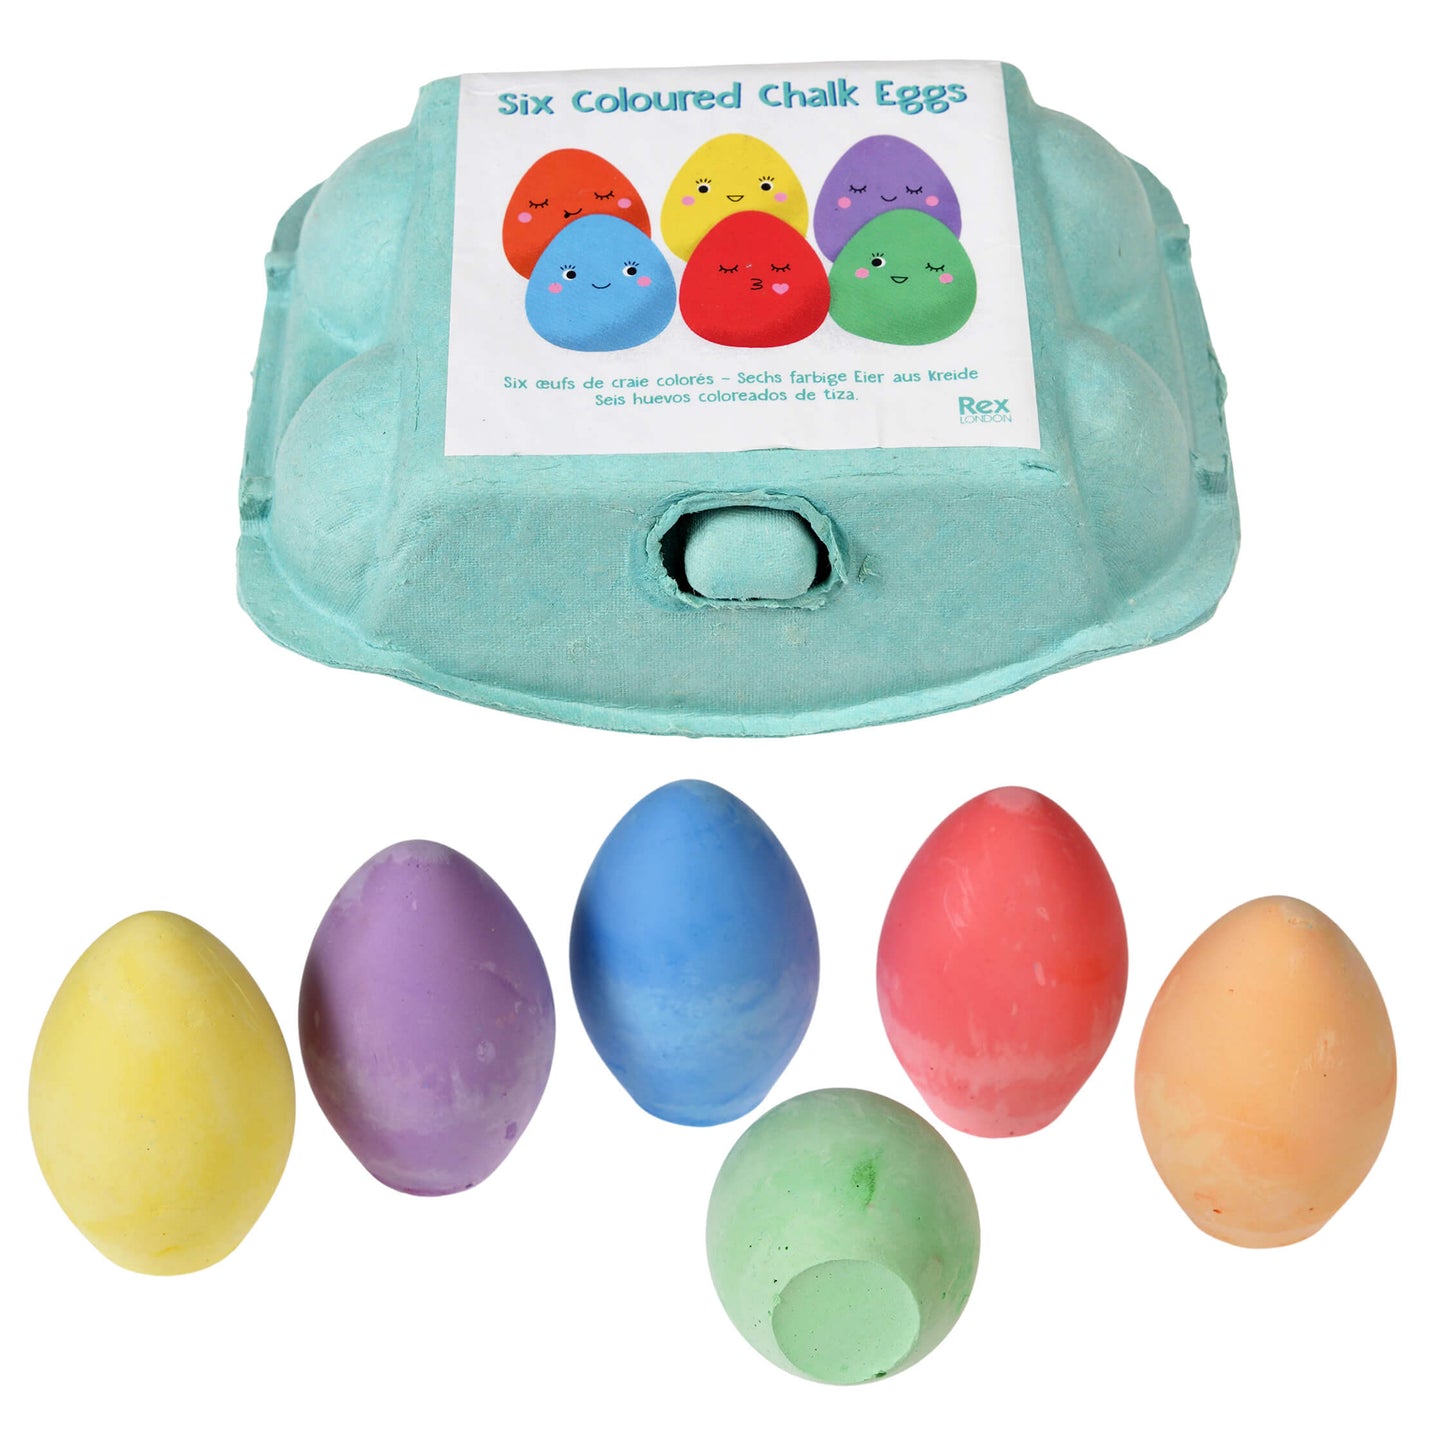 ei krijtjes gekleurd krijt in ei vorm in eierdoosje rex london chalk eggs cadeautje pasen lente speelgoed vooraanzicht